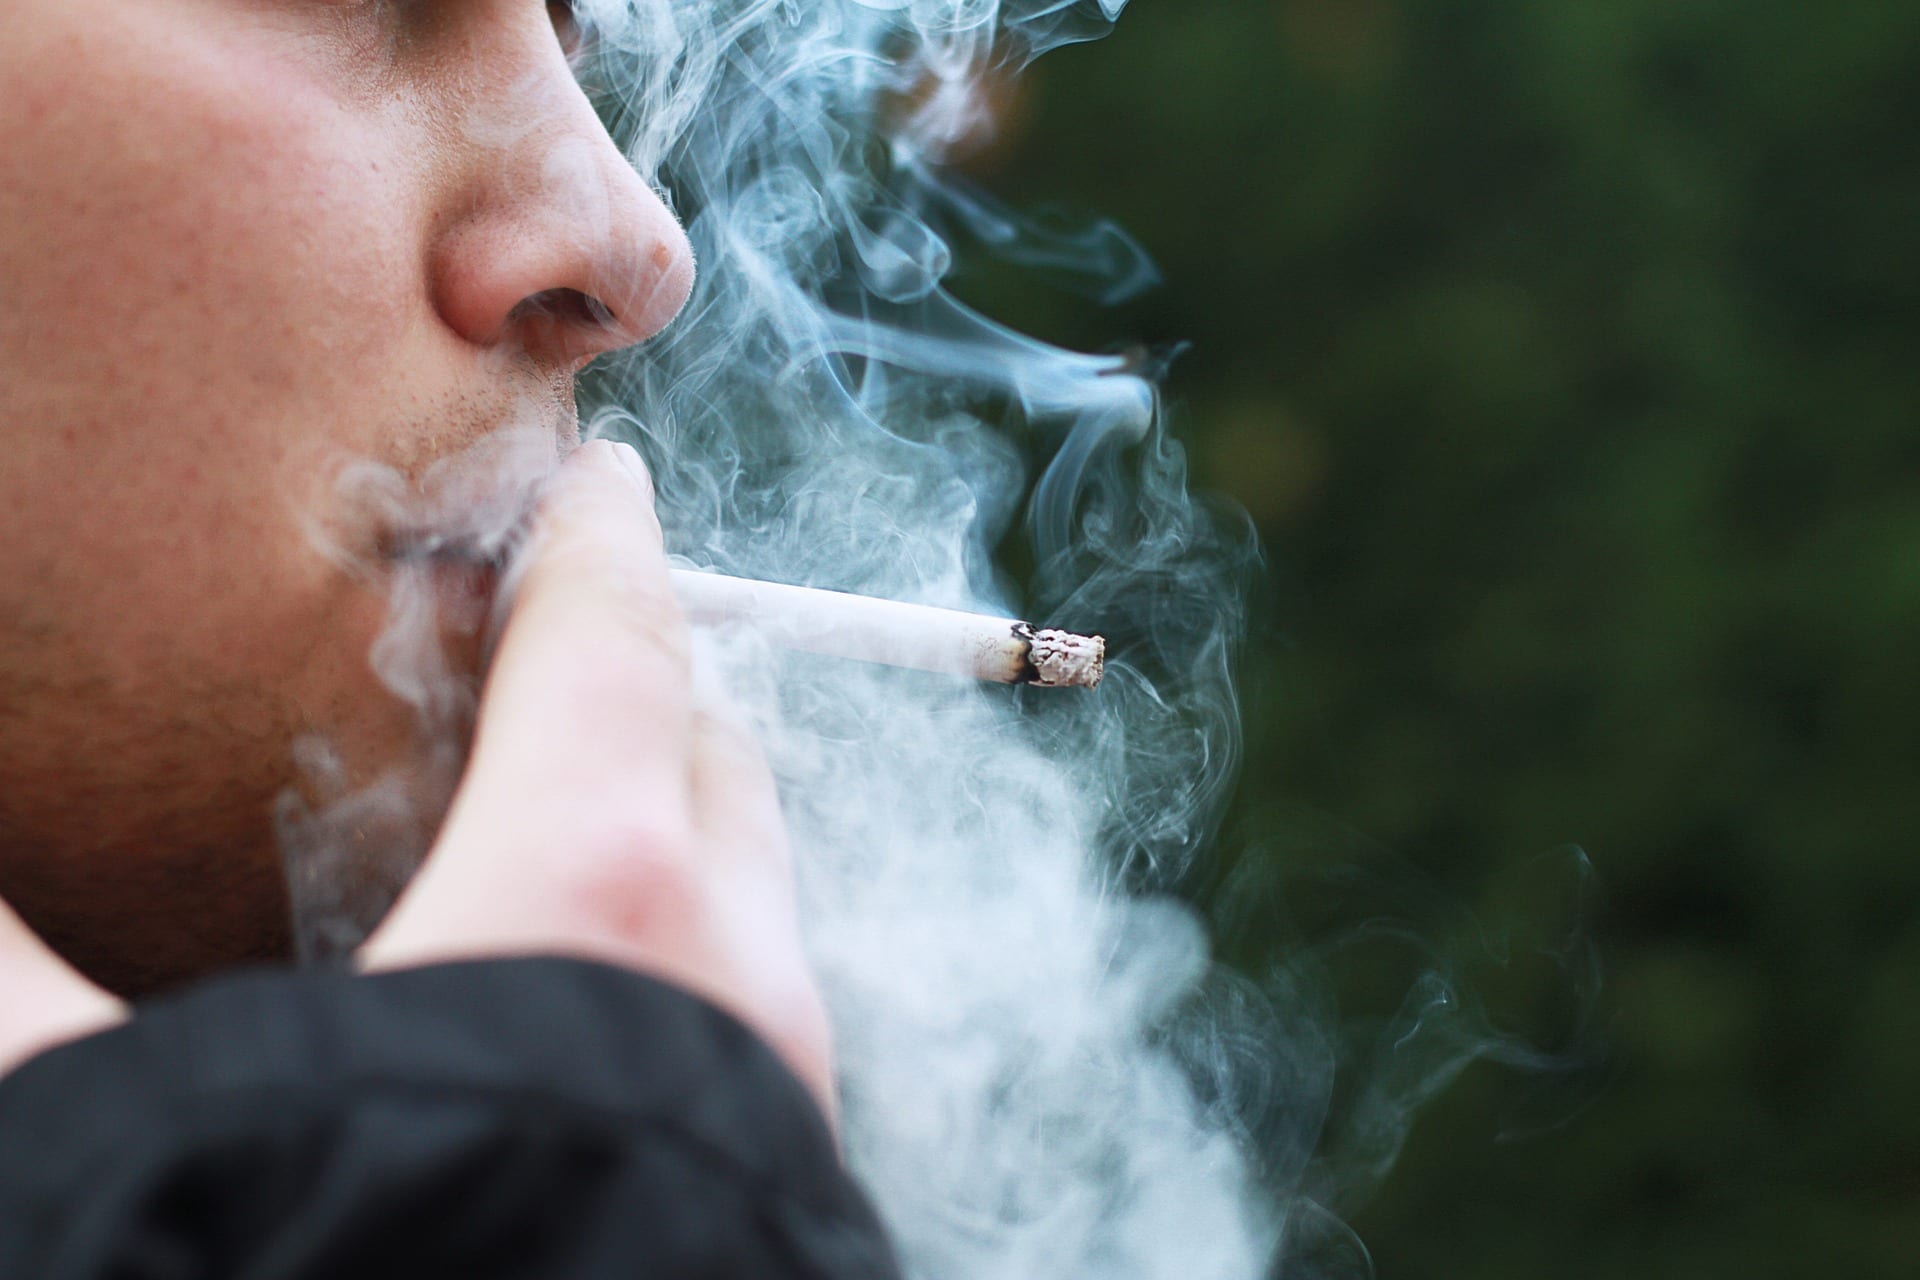 Man smoking; image by Kruscha, via Pixabay, CC0.